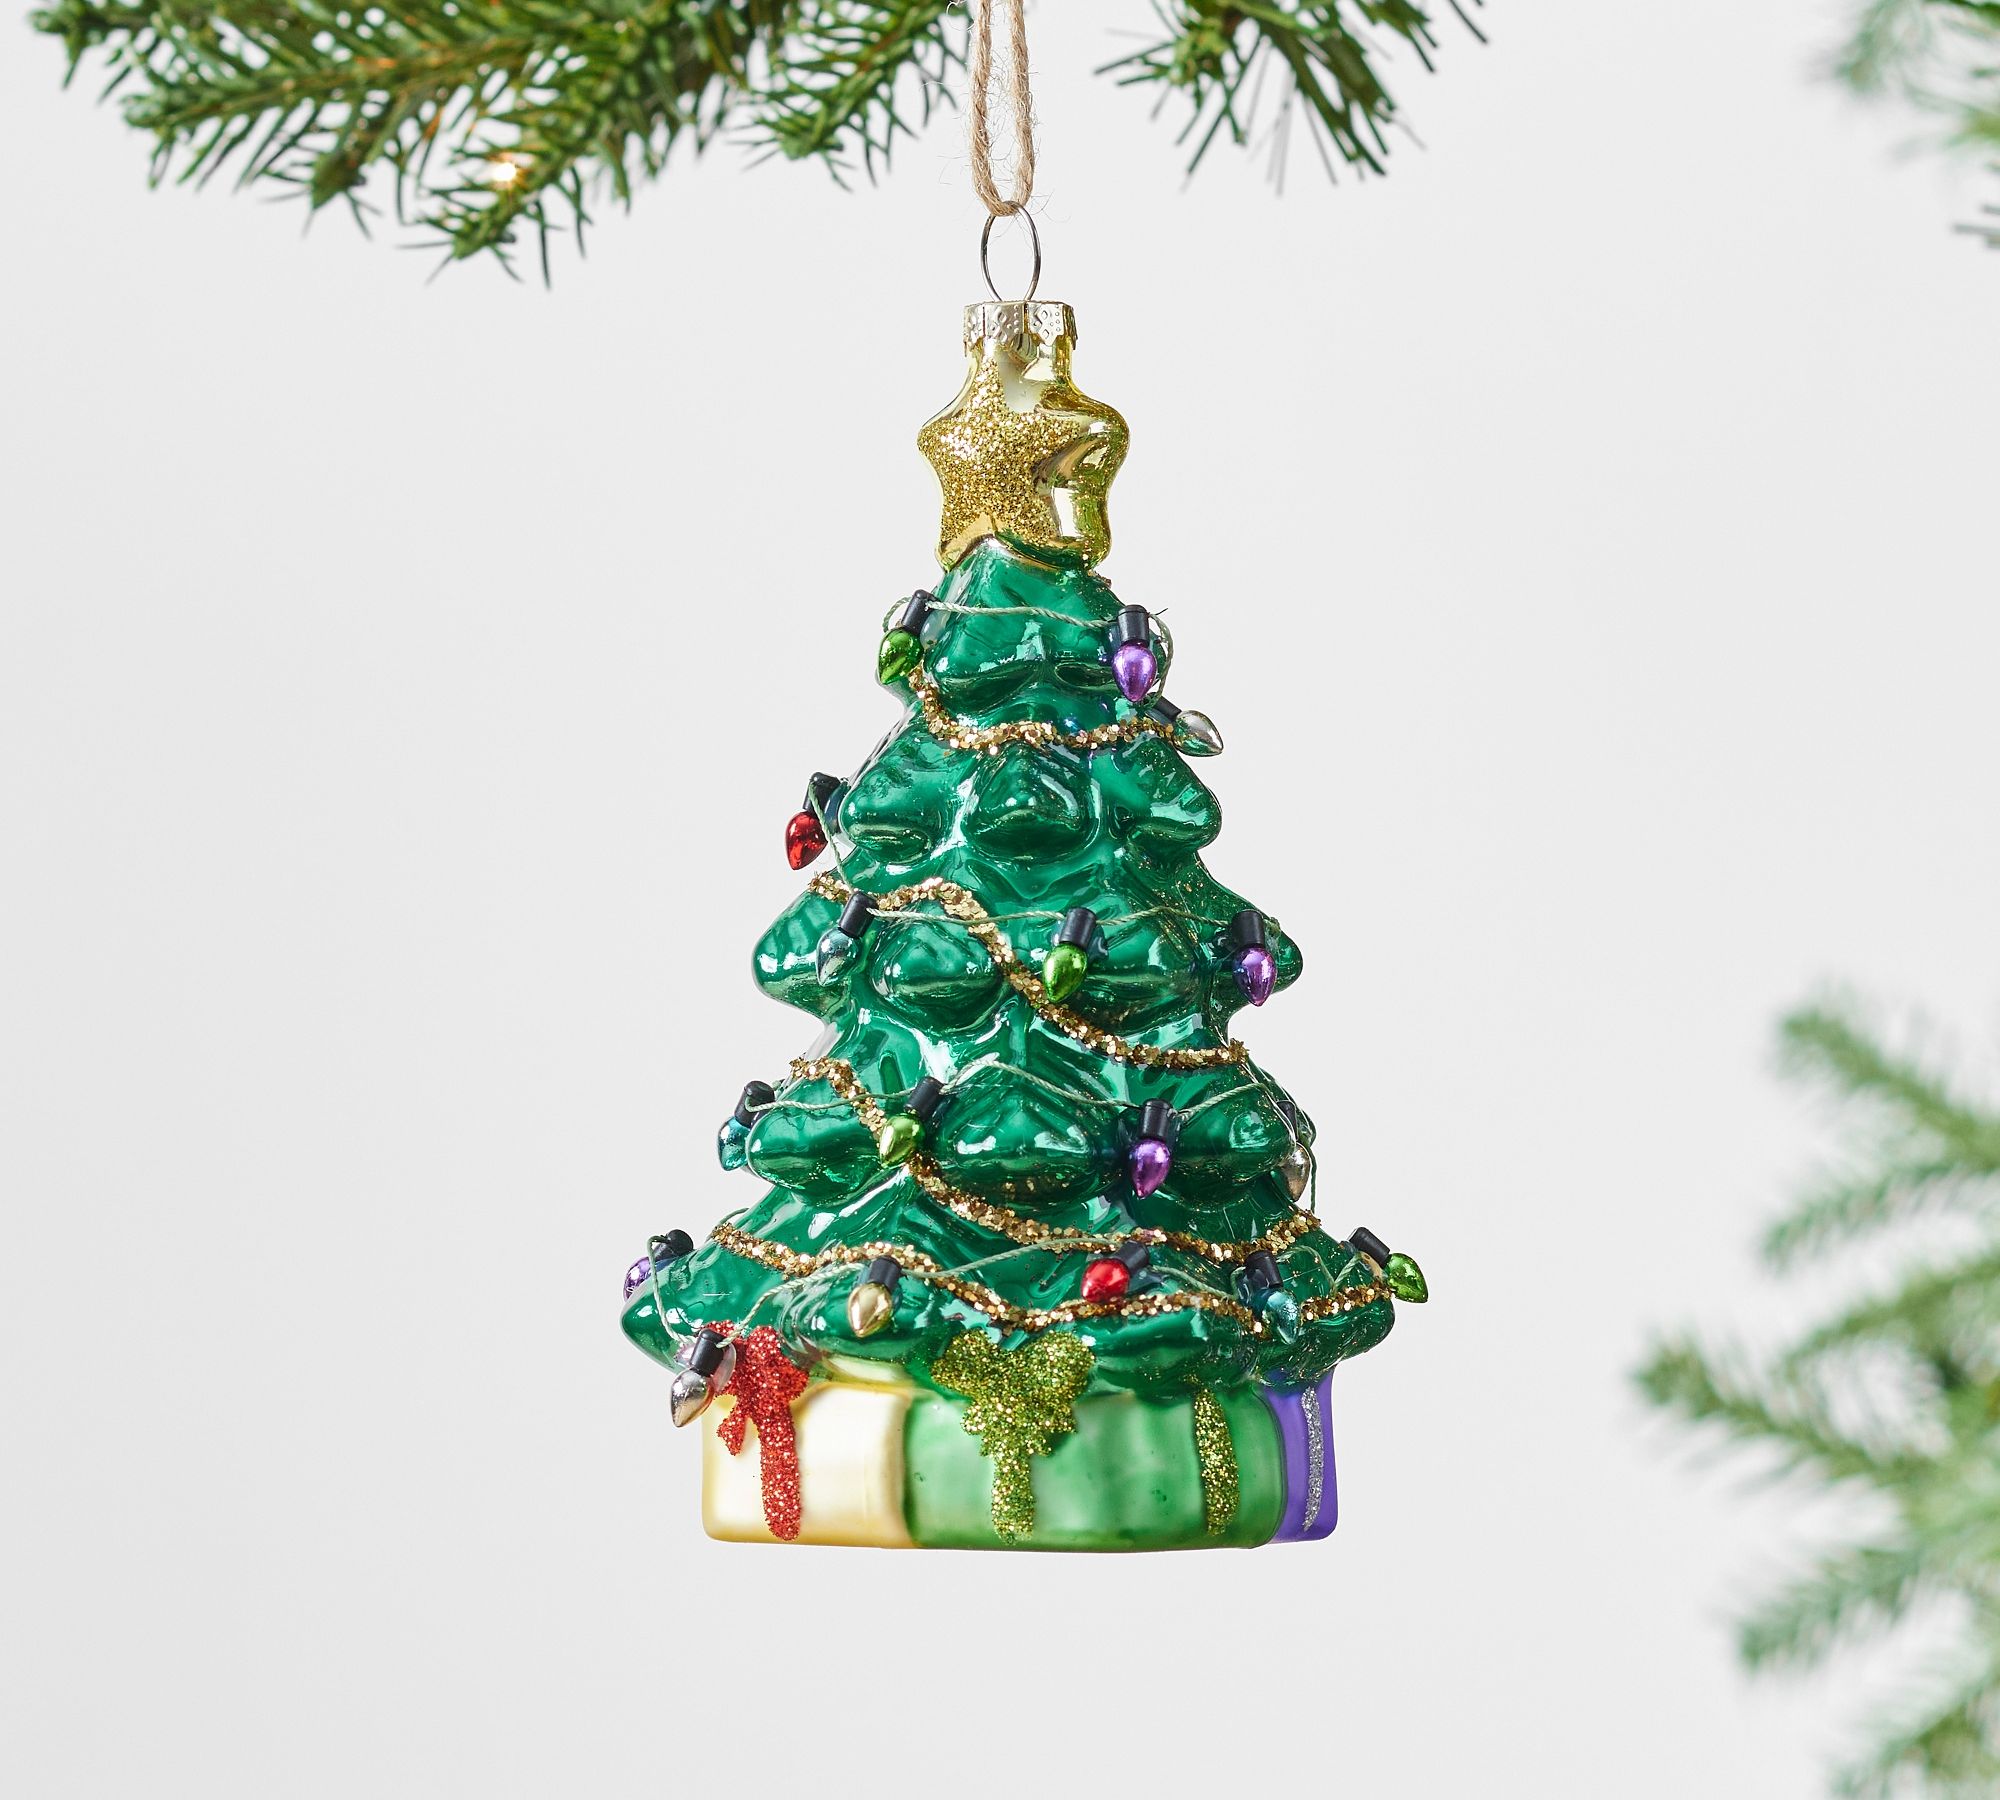 Mercury Tree with Presents Ornament